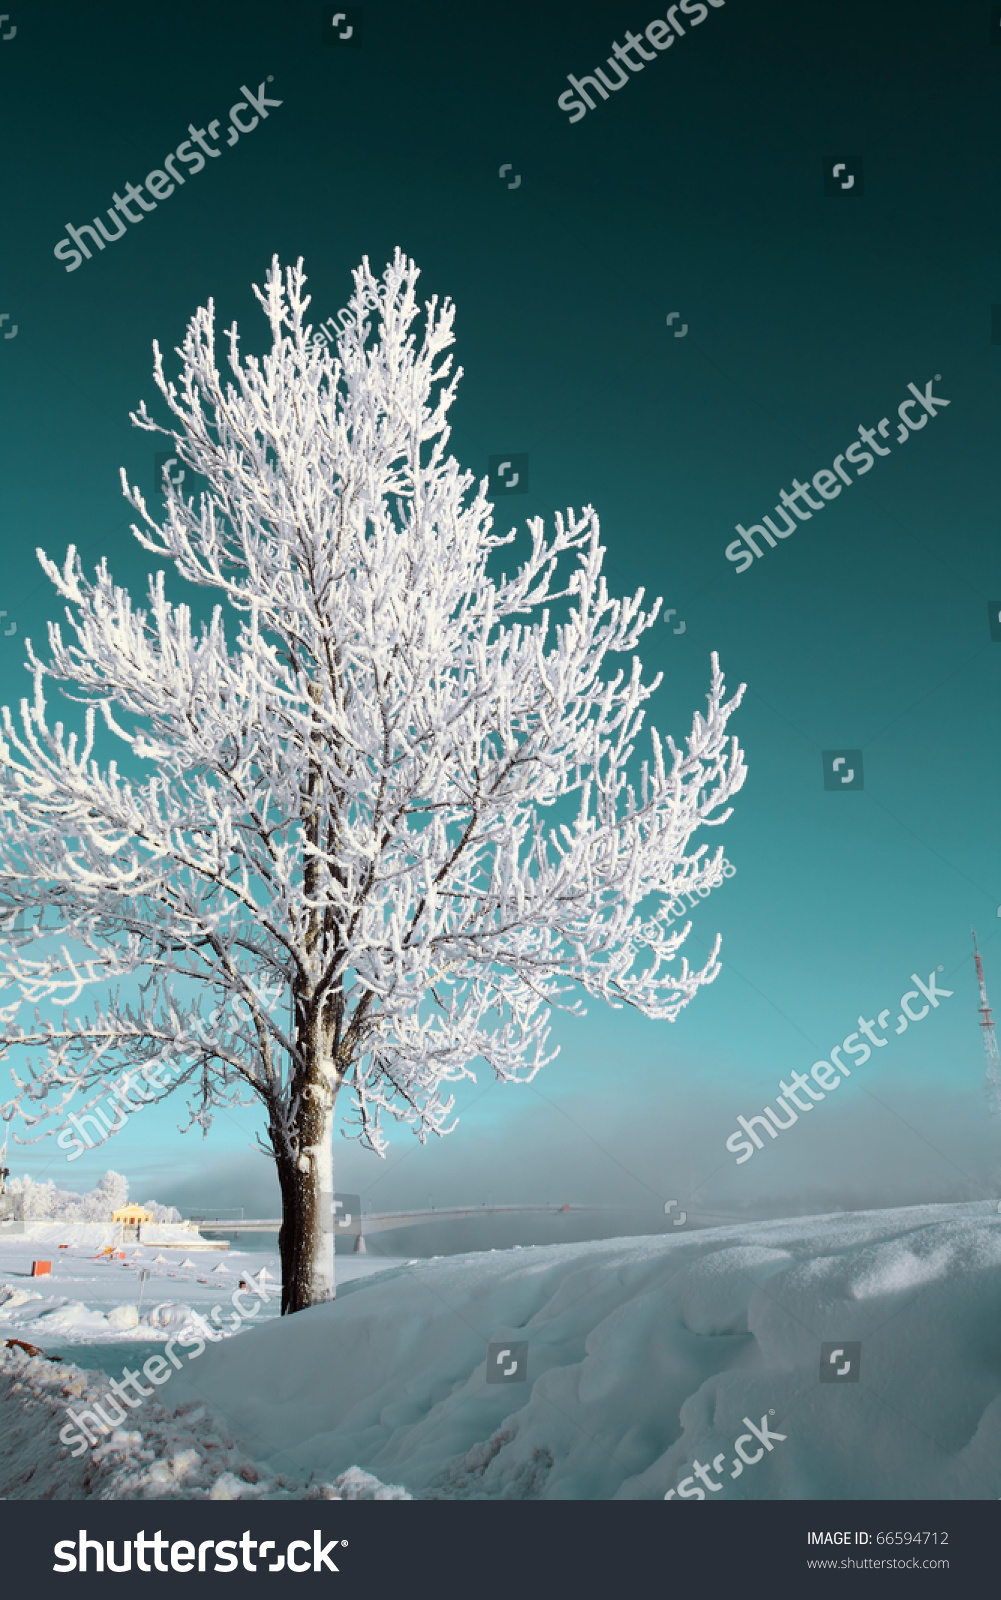 tree in snow #66594712